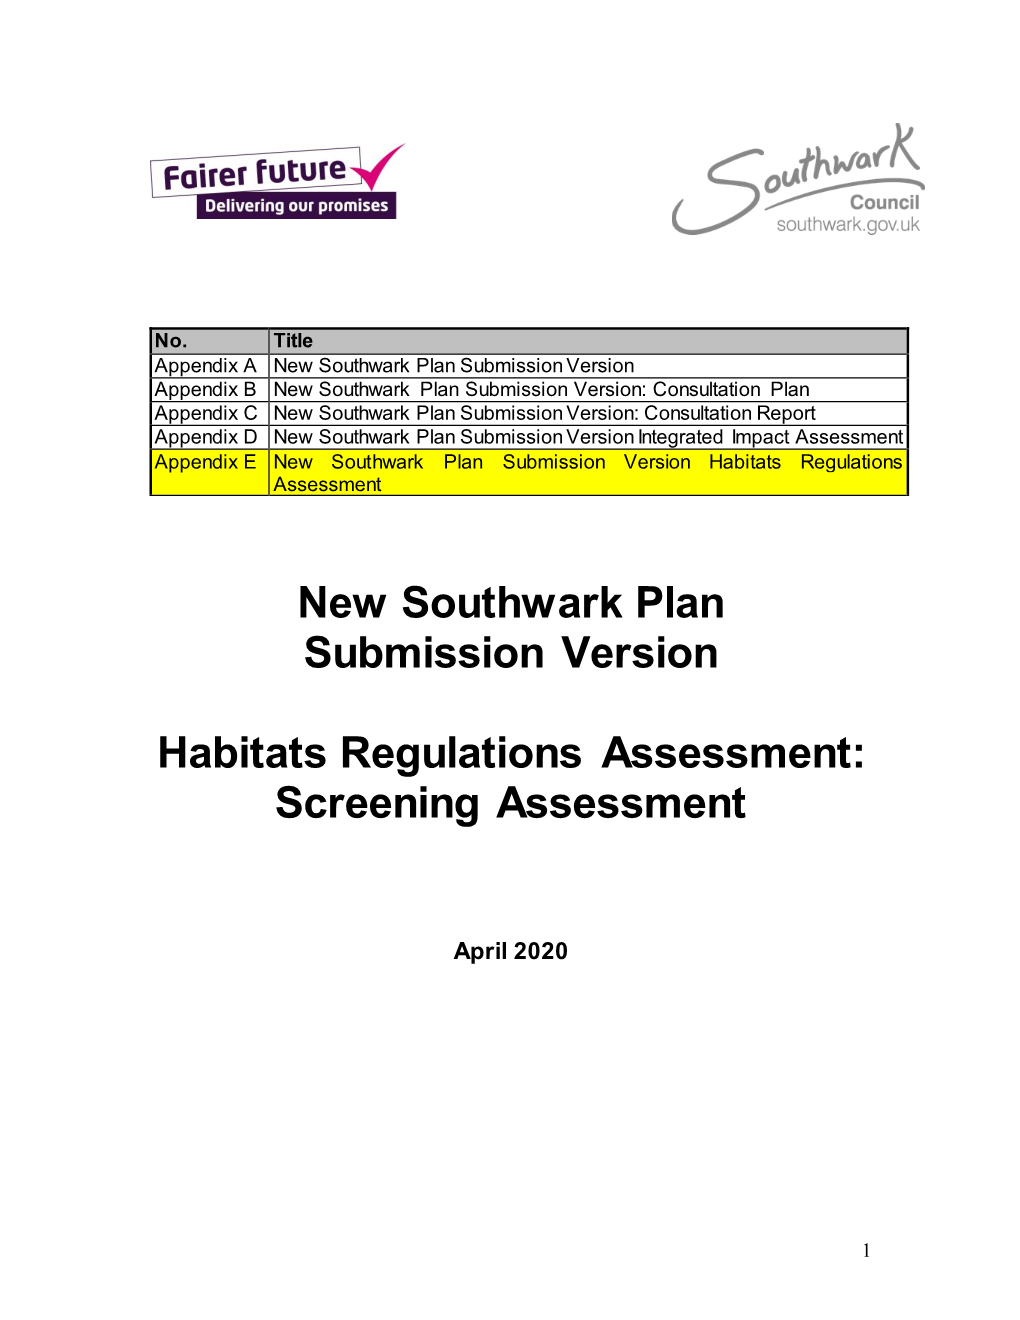 New Southwark Plan Submission Version Habitats Regulations Assessment